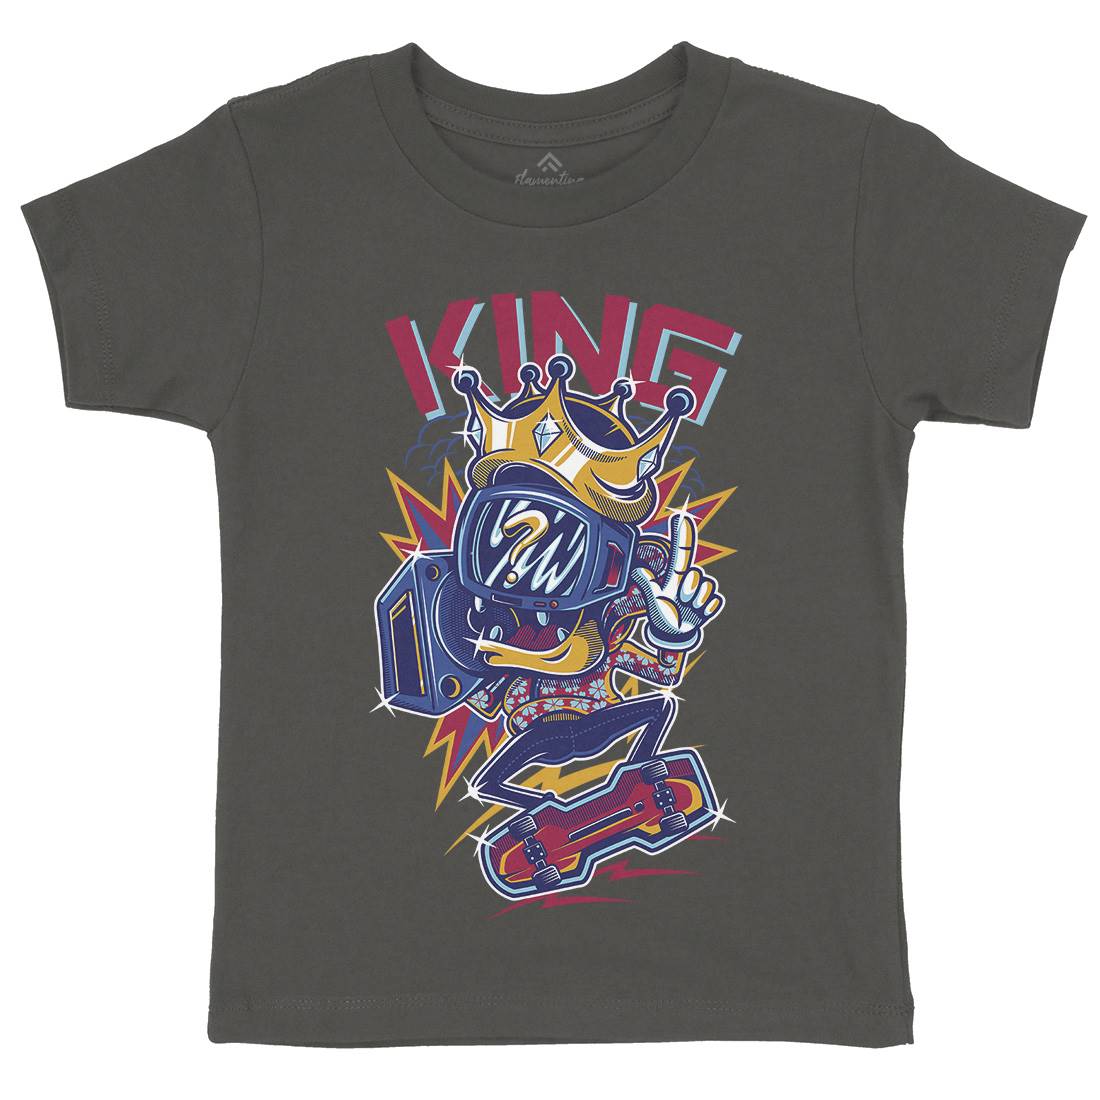 King Kids Organic Crew Neck T-Shirt Skate D630